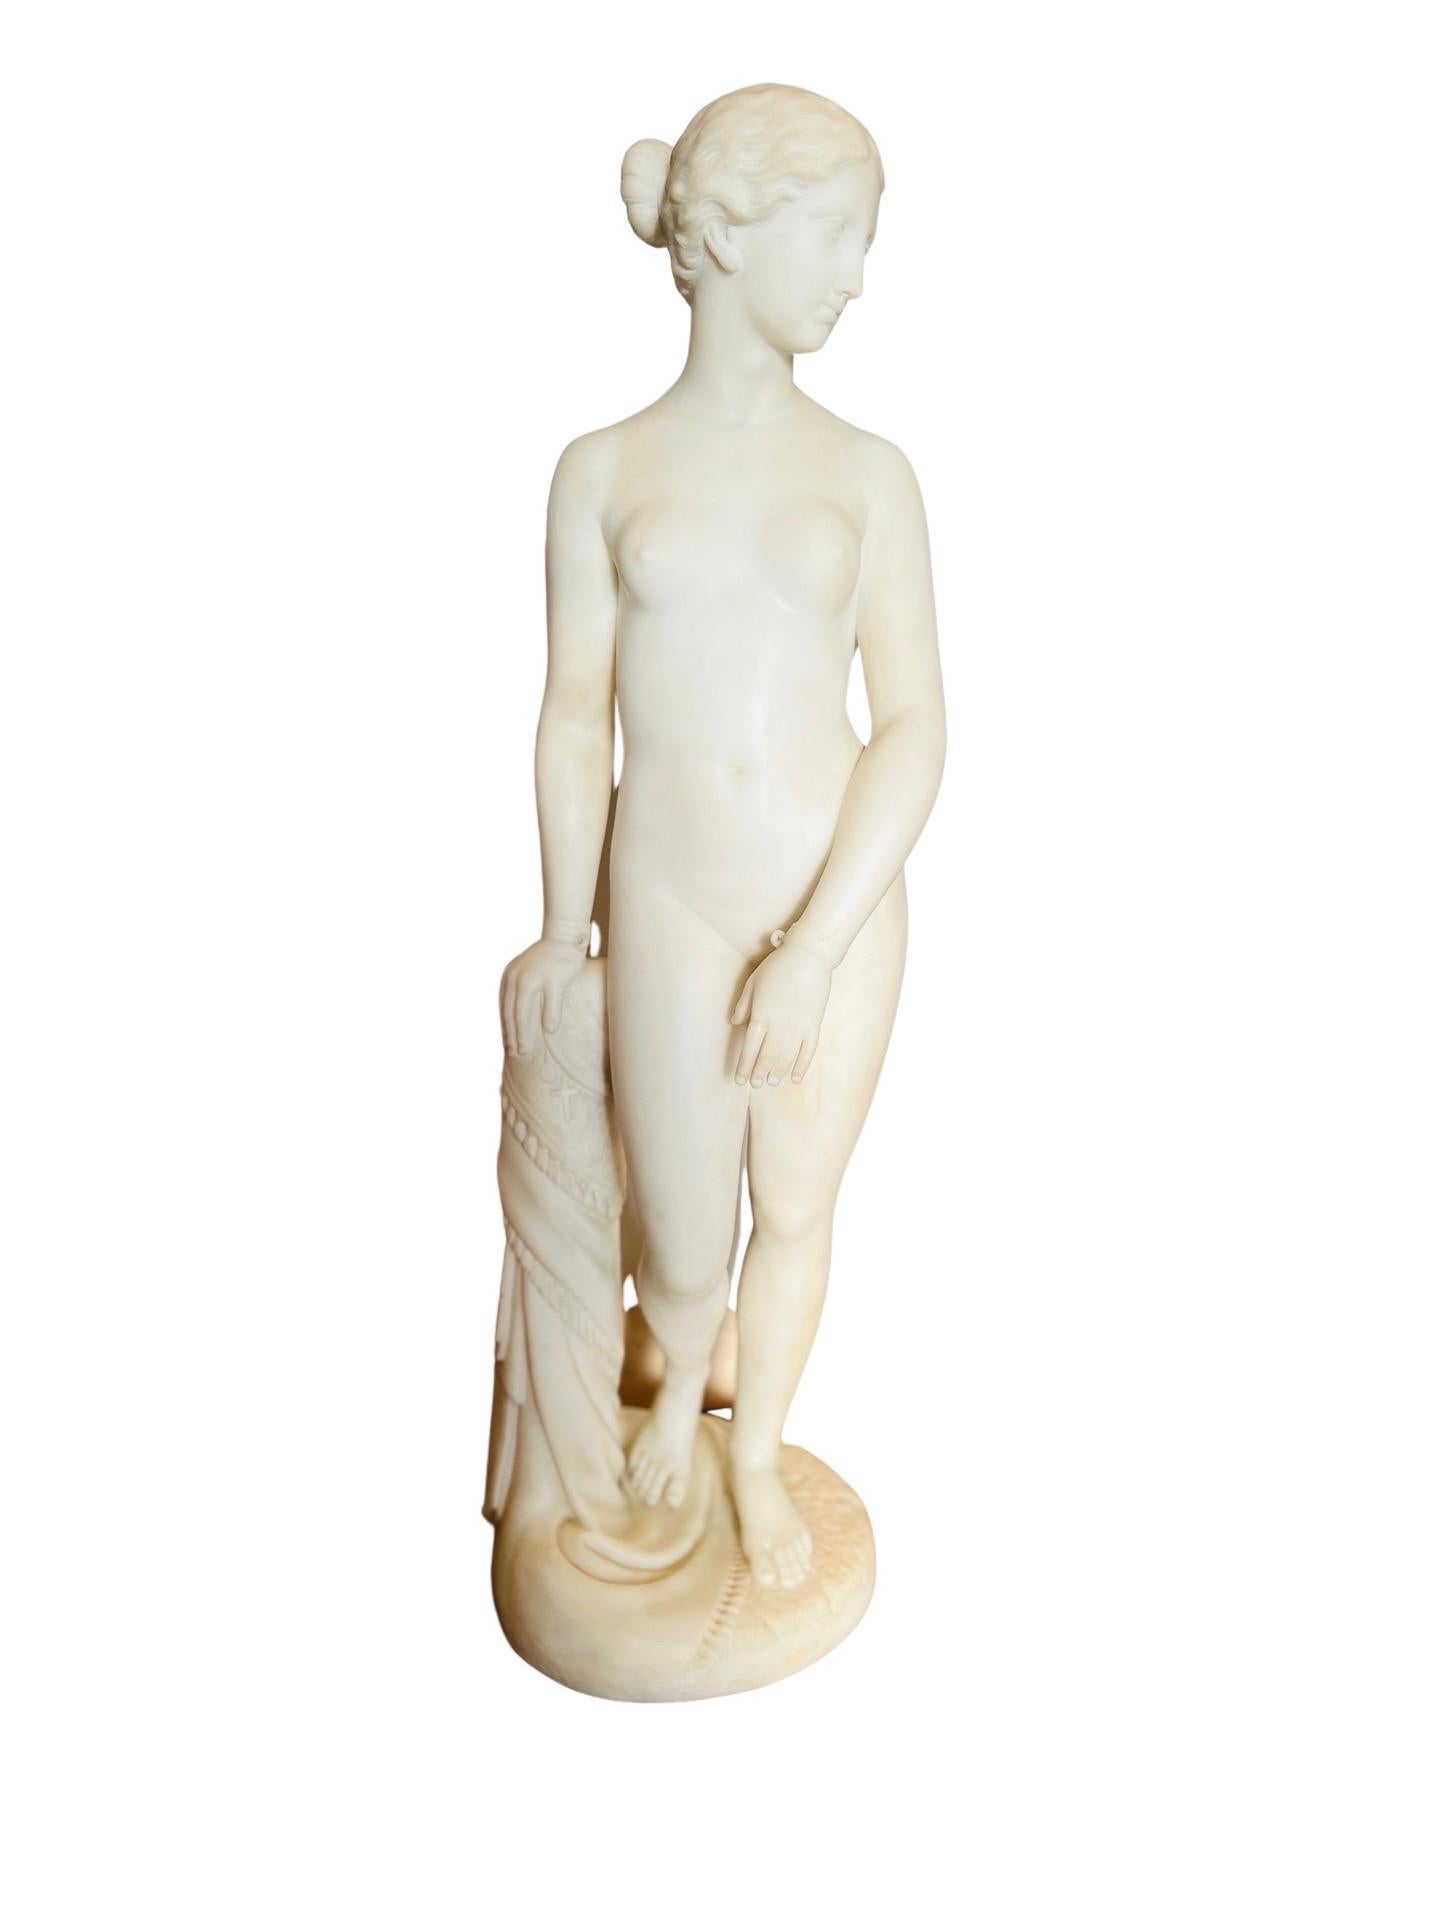 Grec classique D'après Hiram Powers, sculpture en marbre Grand Tour du esclave grec en vente